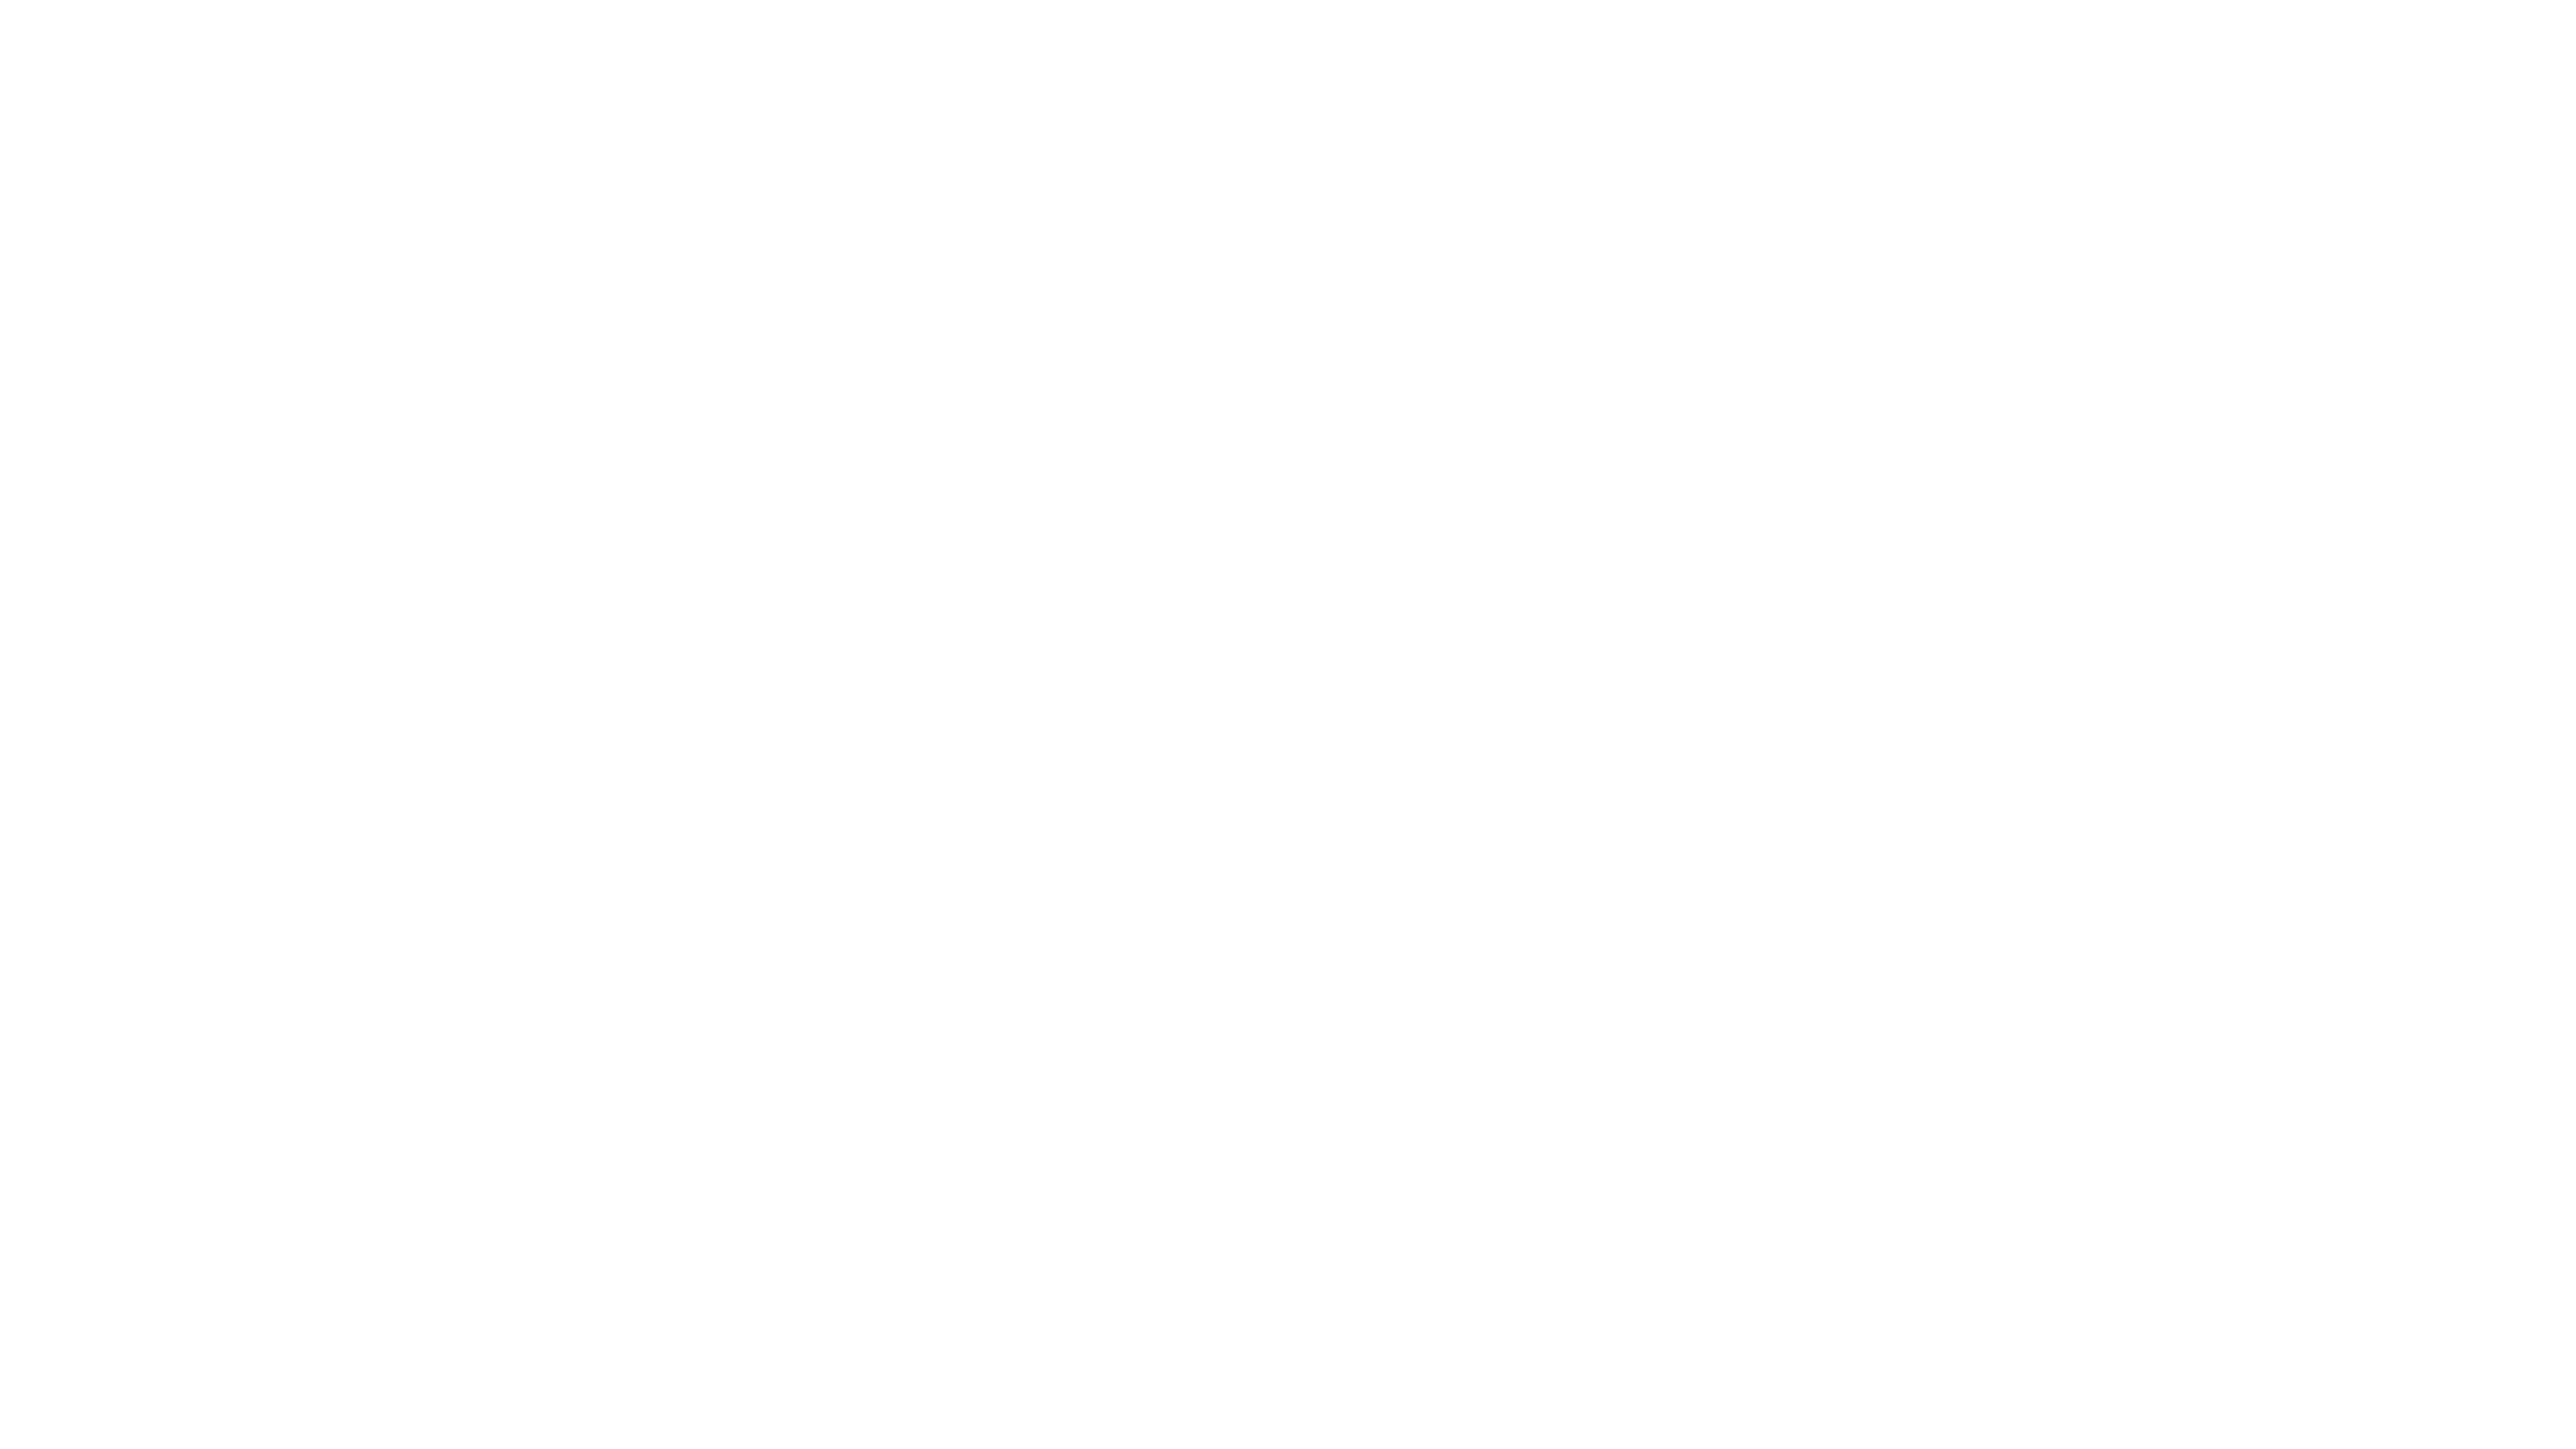 Samsung-Logo (1)